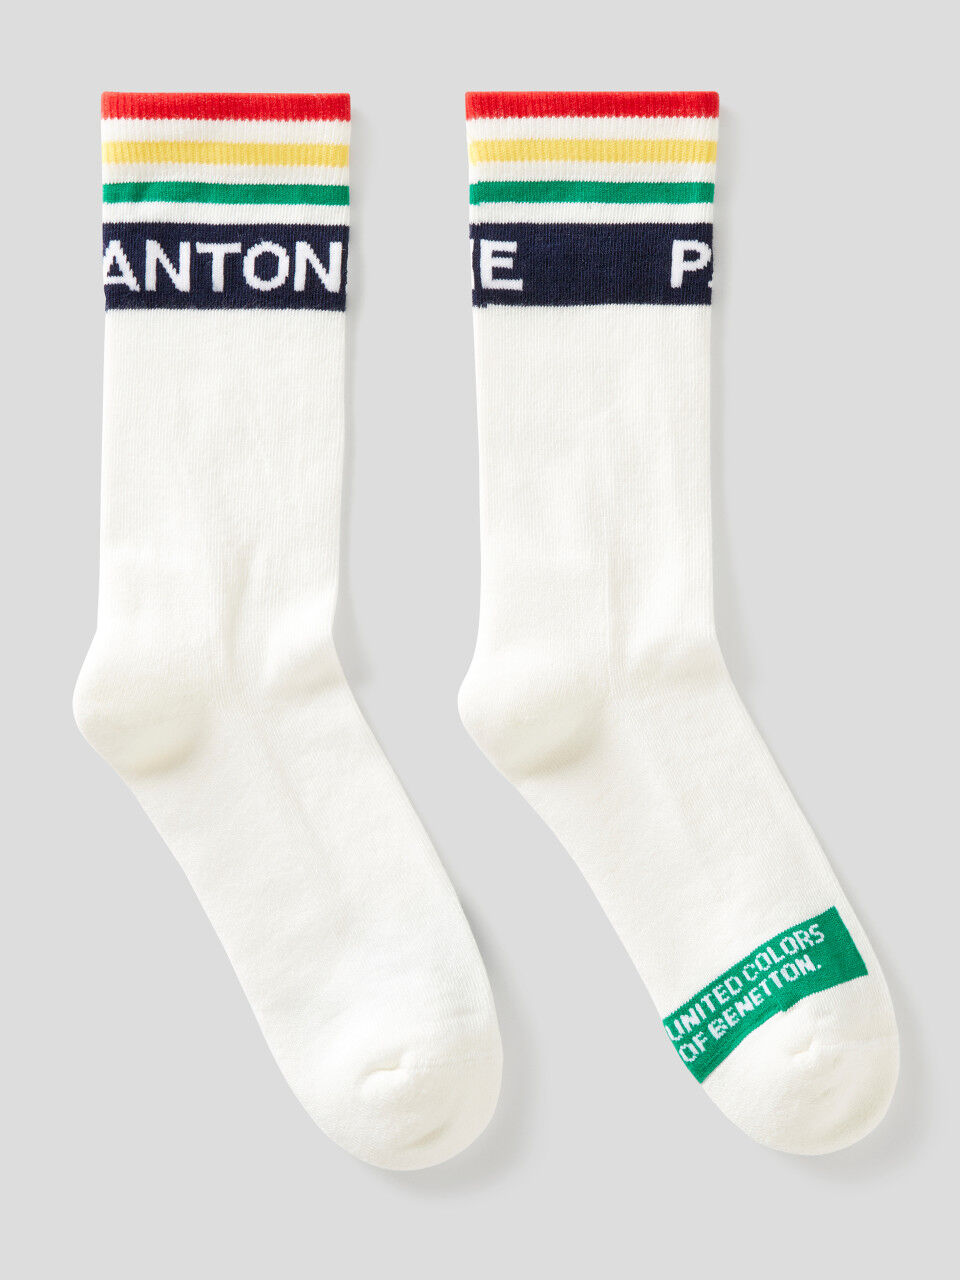 BenettonxPantone™ multicolor socks